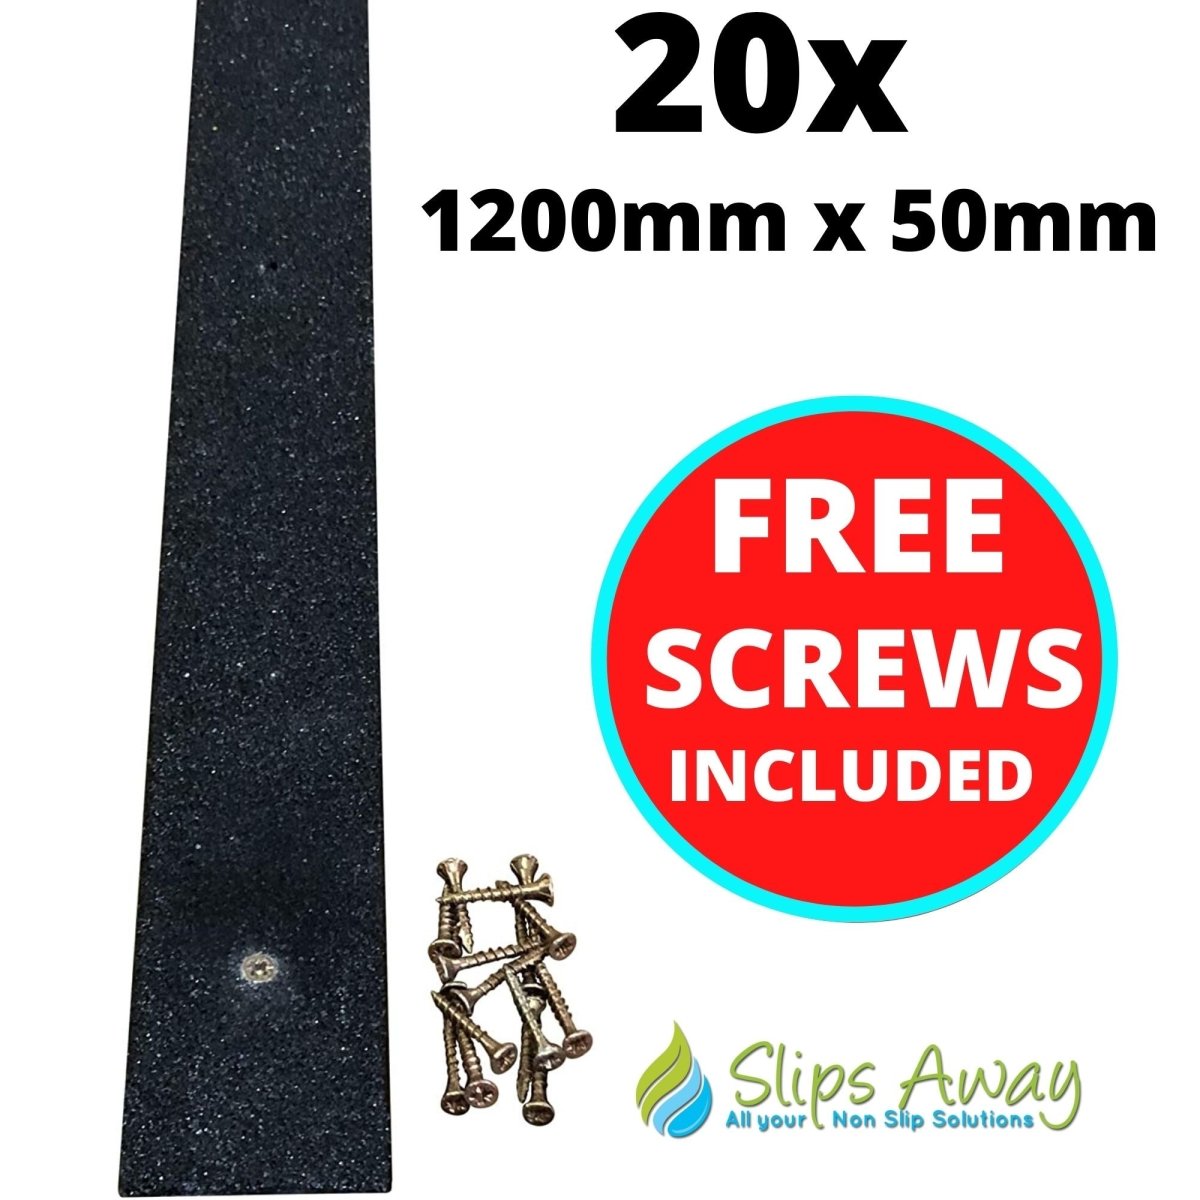 Black Non Slip Decking Strips - Slips Away - decking strip black 1200mm x 50mm 20x pack -